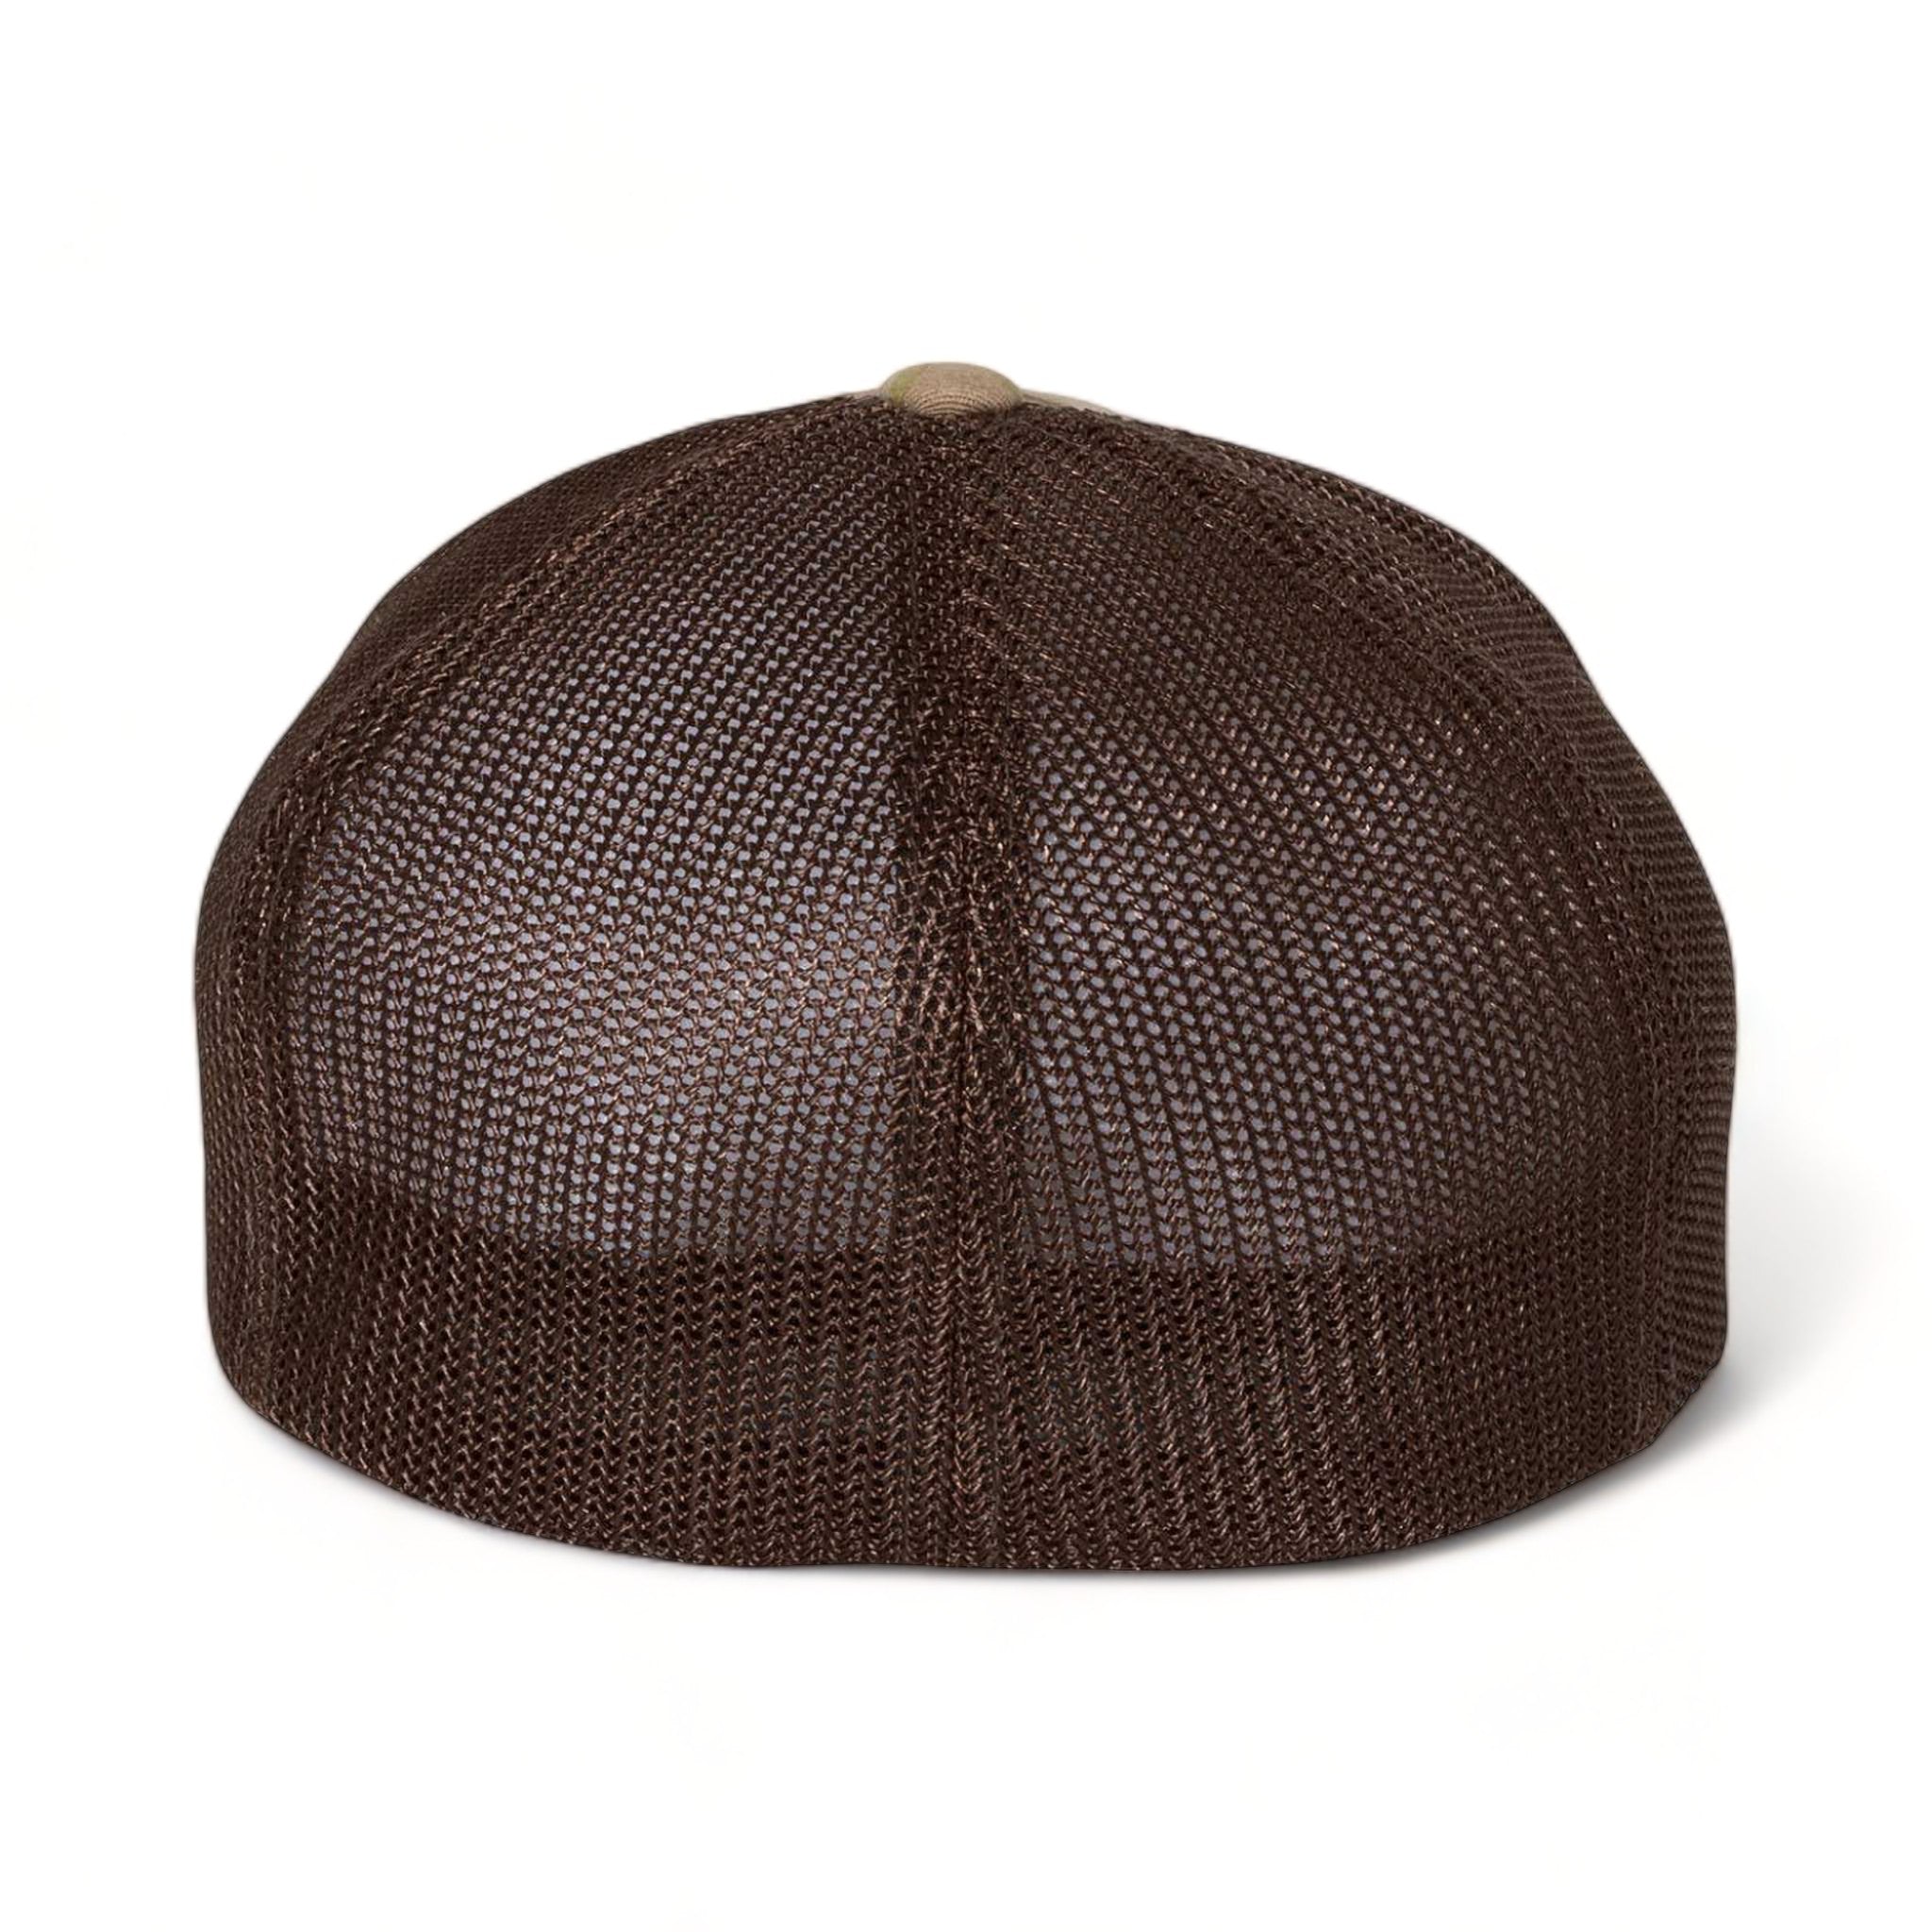 Back view of Flexfit 6511 custom hat in multicam arid and brown